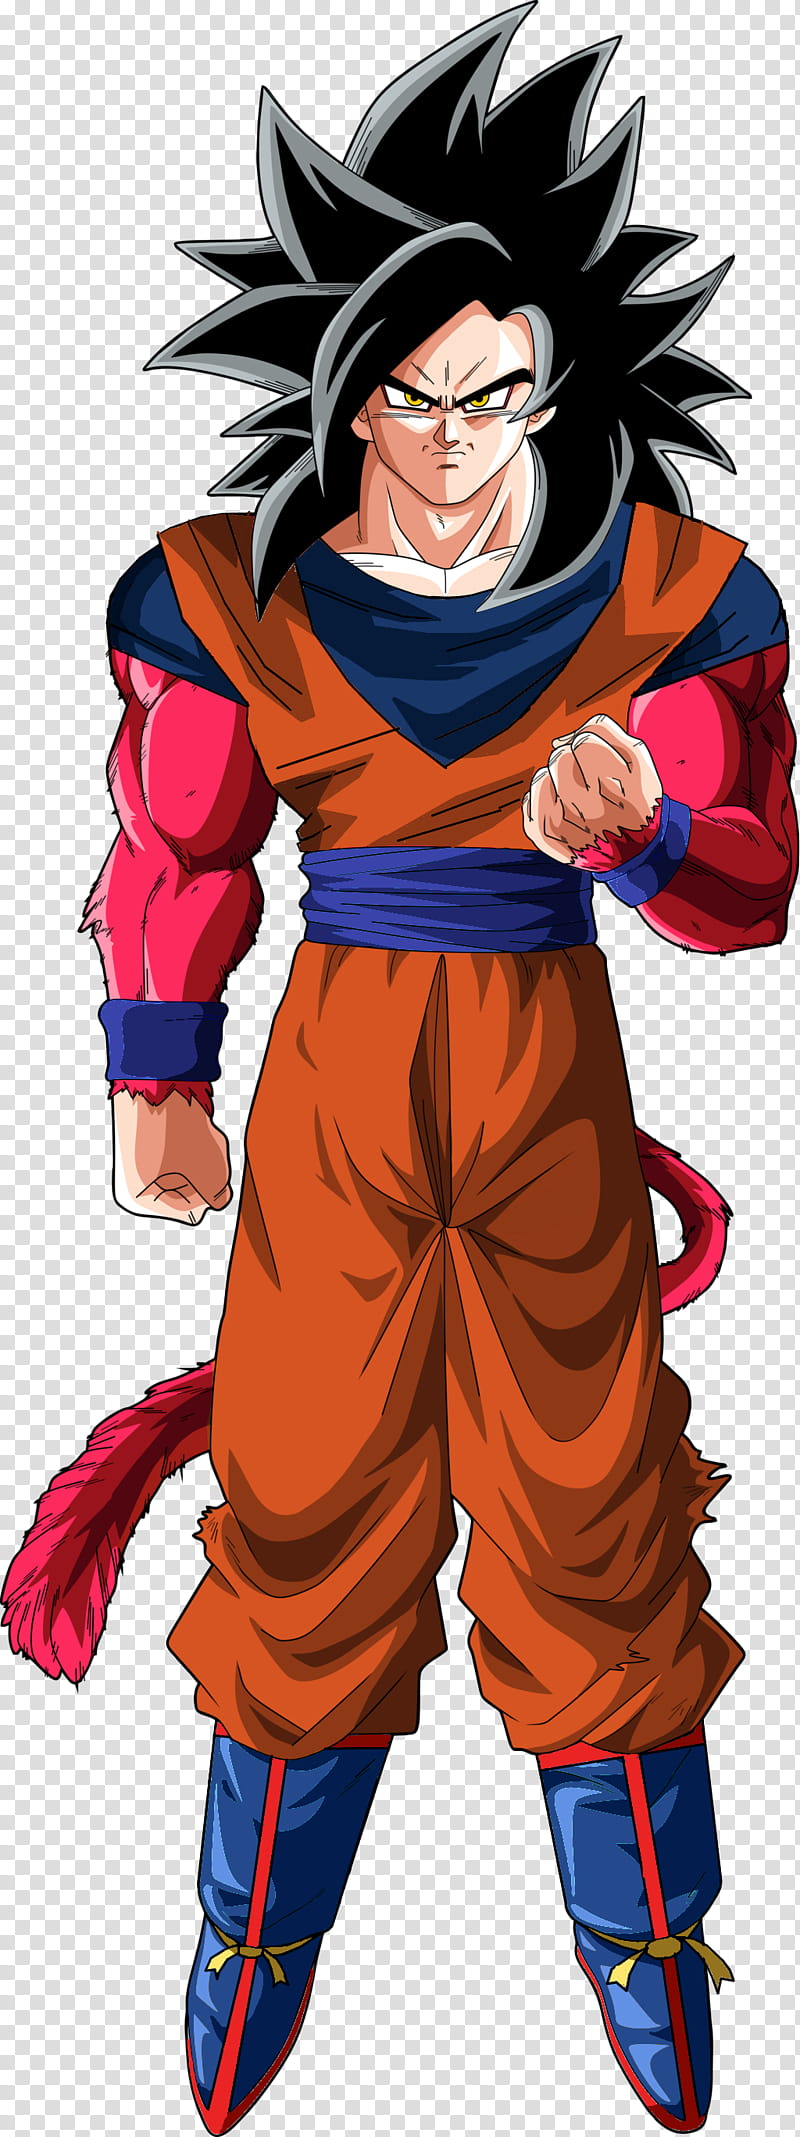 Goku render Bucchigiri Match transparent background PNG clipart